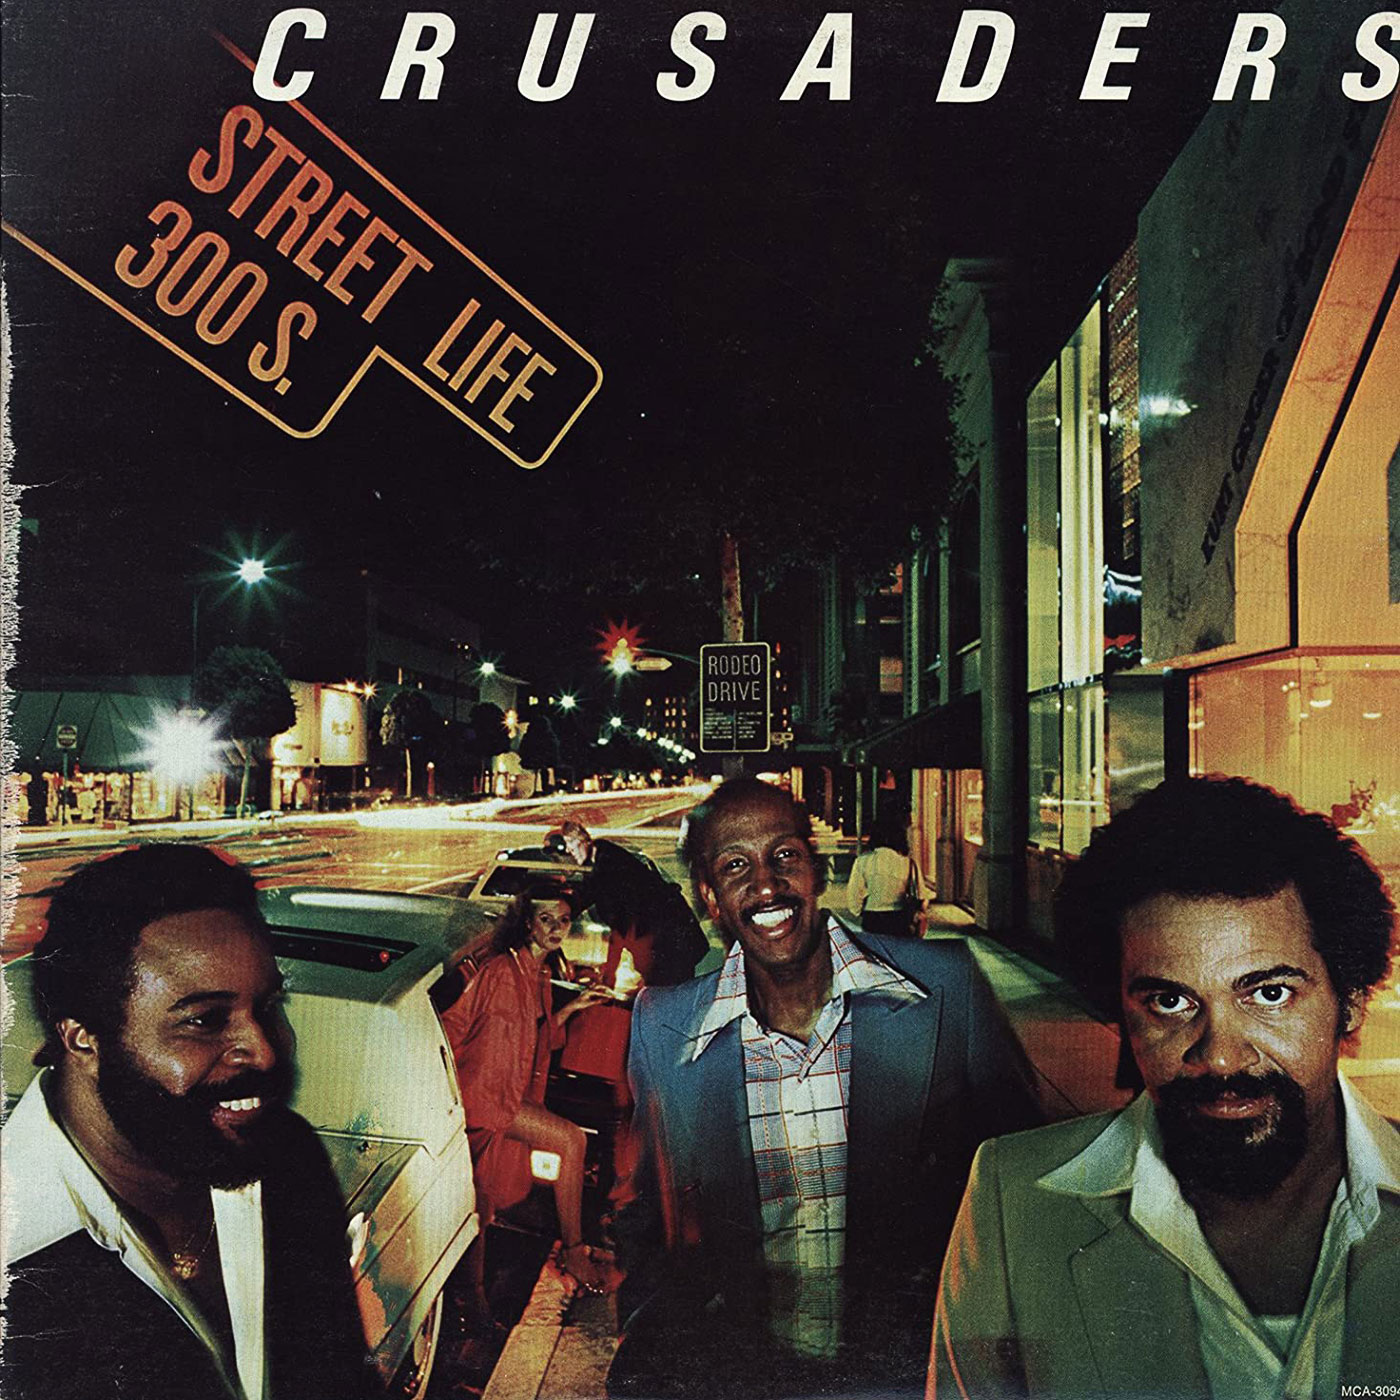 429 The Crusaders – Street Life